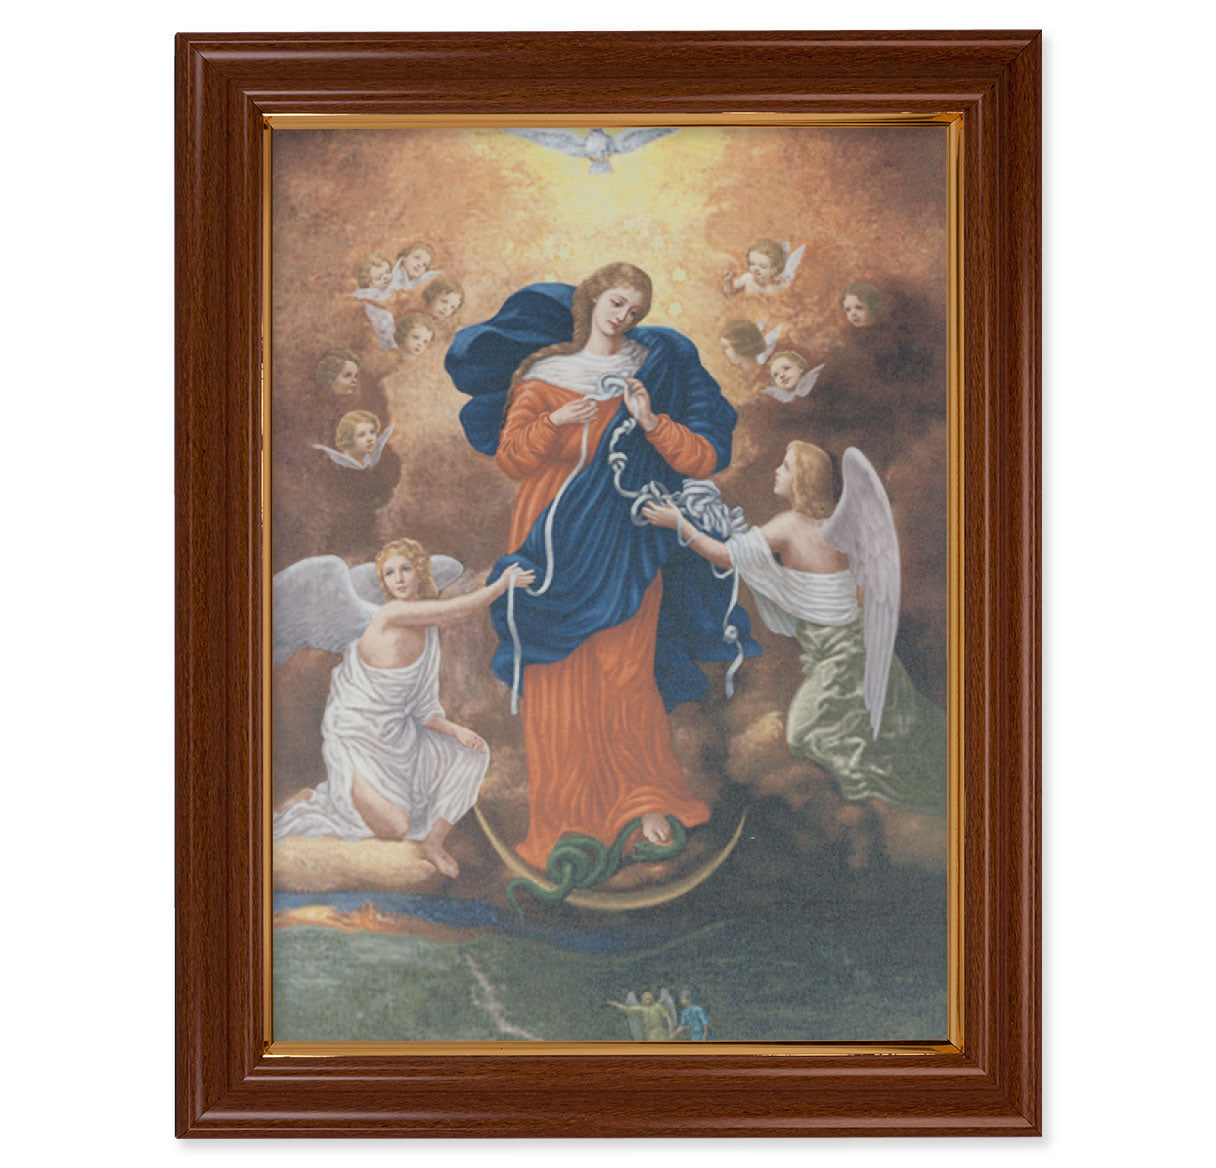 Our Lady of Grace Walnut Finish Framed Art